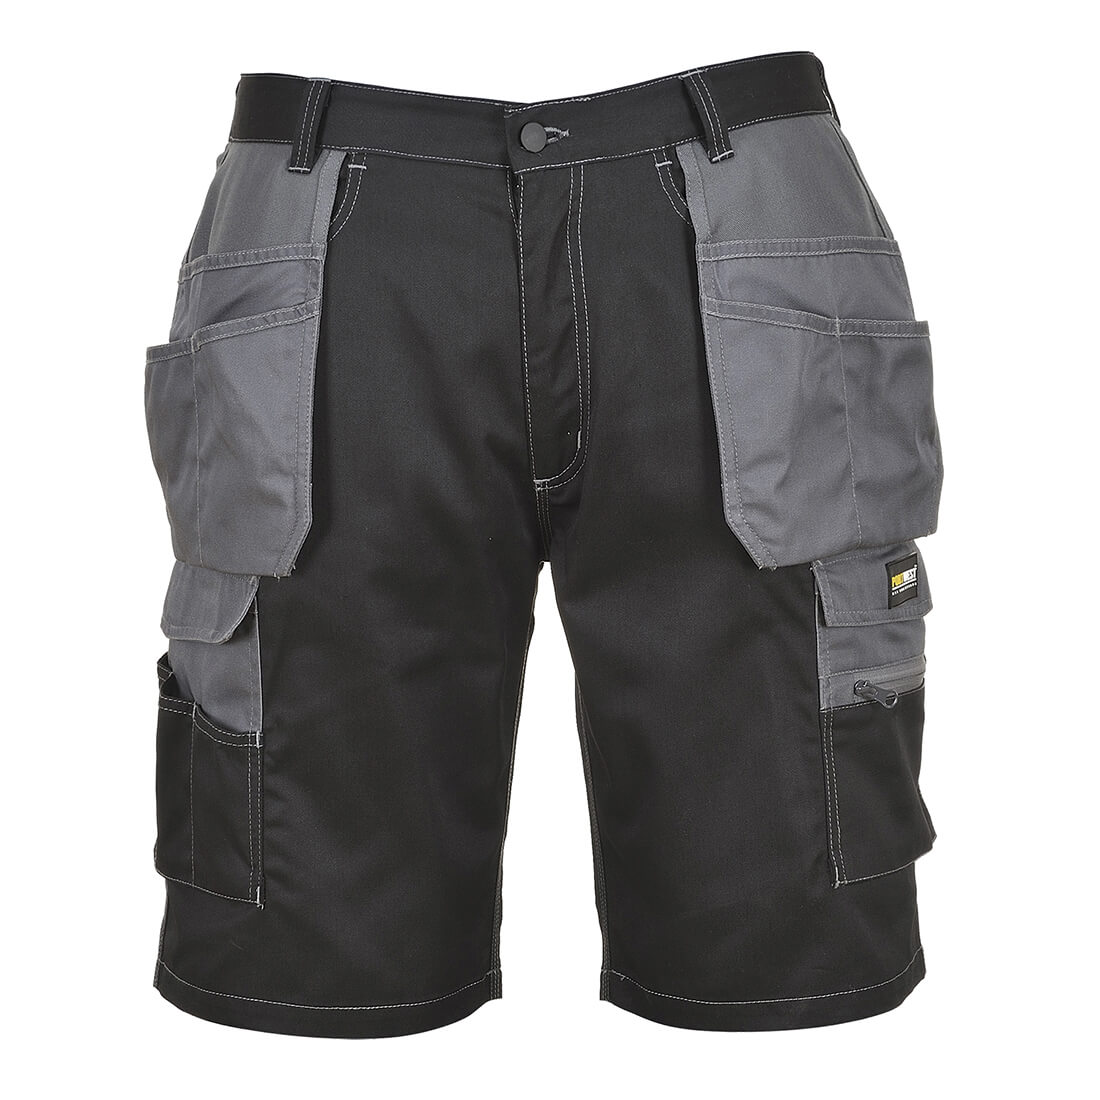 Portwest KS18 Granite Holster Shorts Black / Grey 2XL